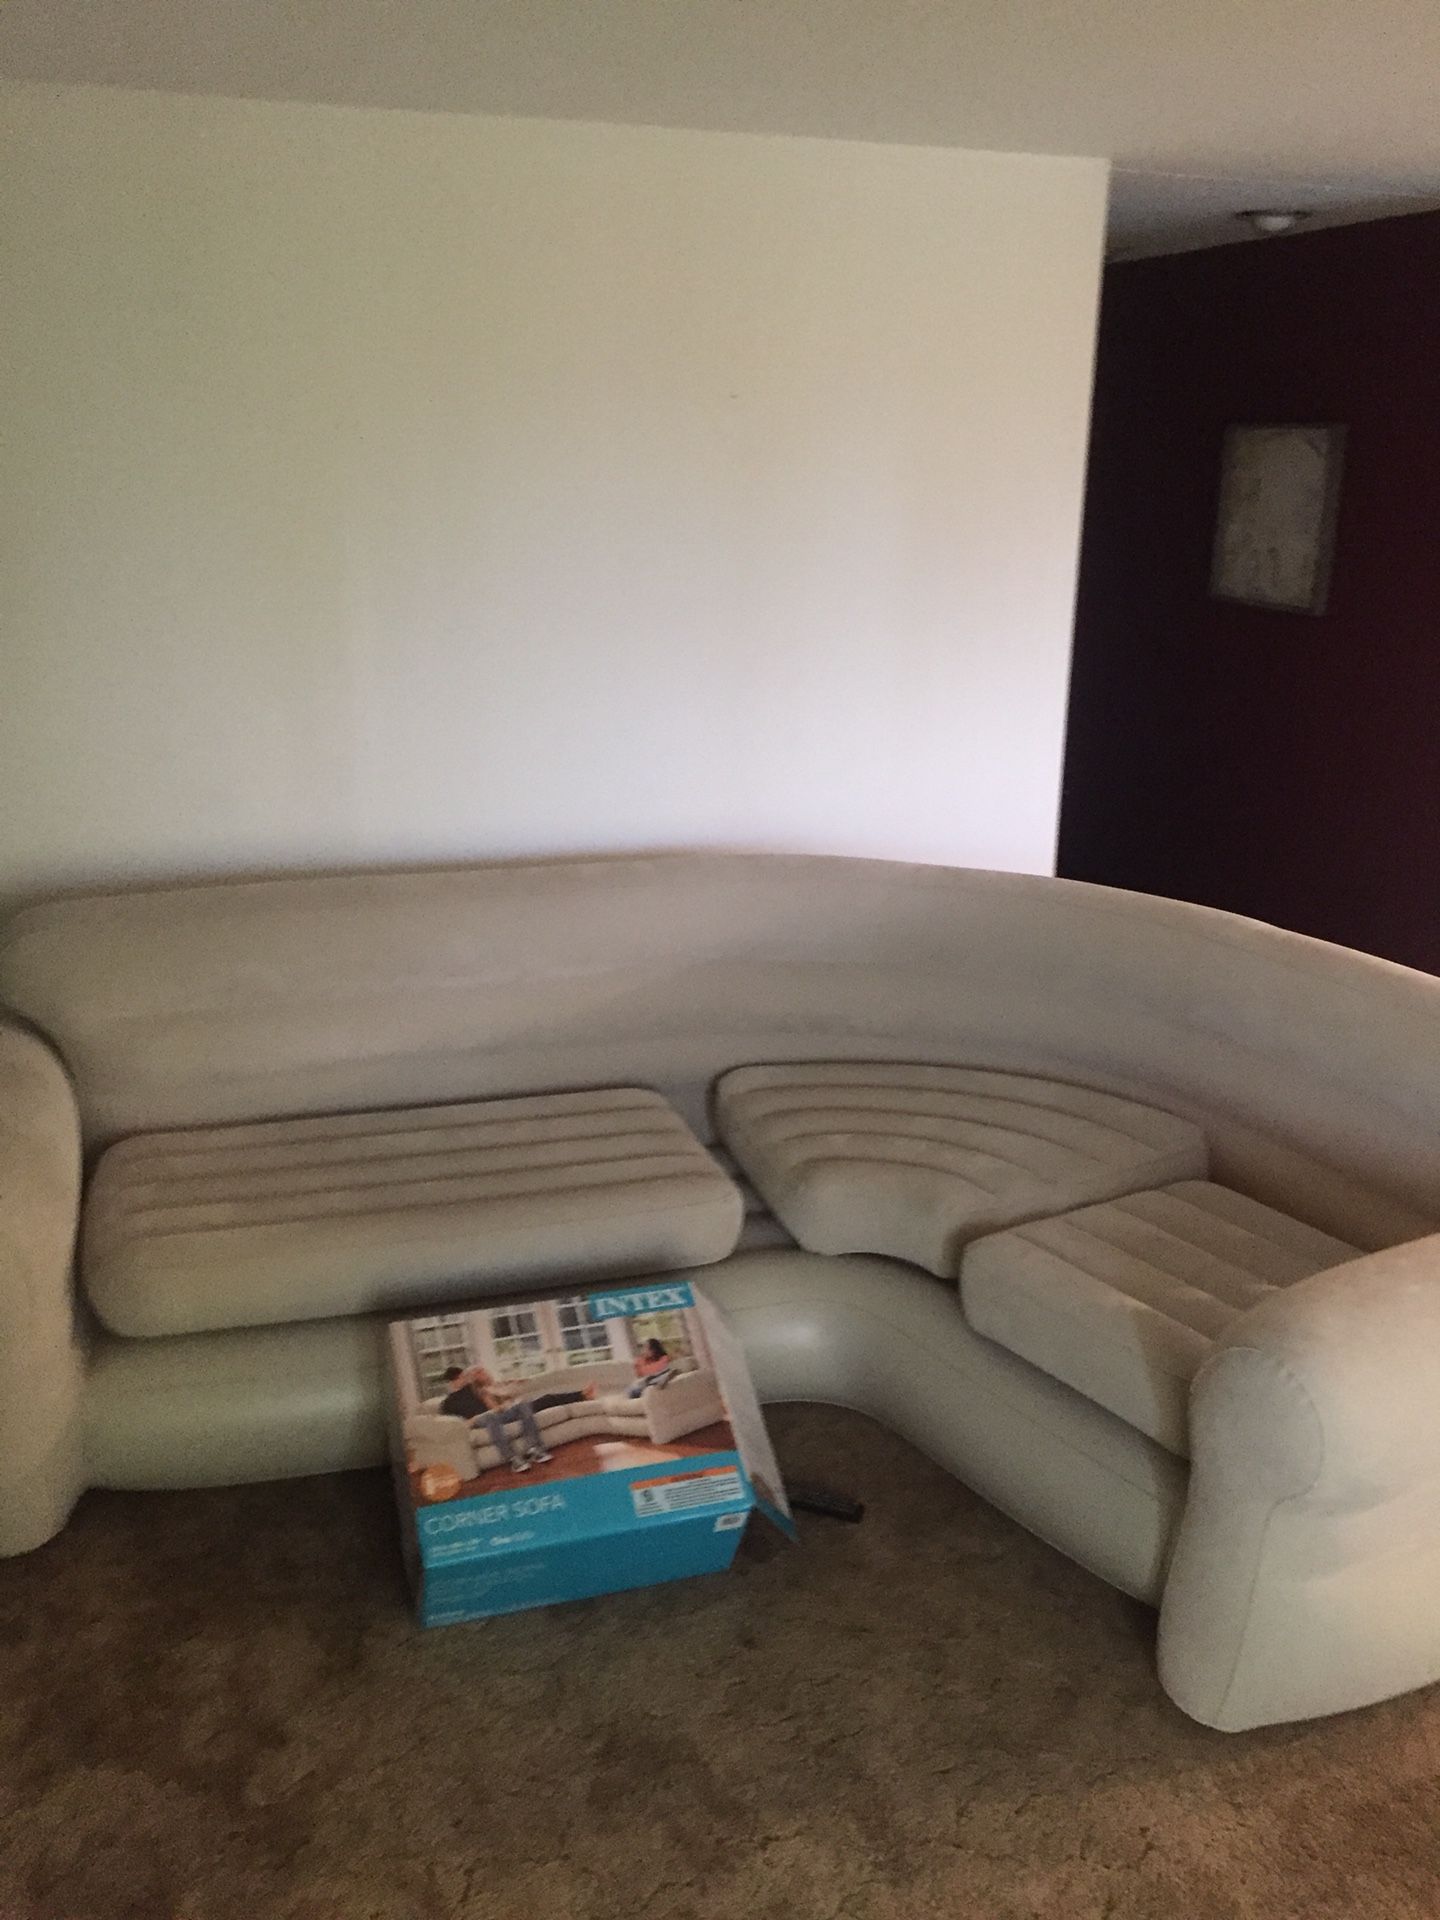 Intex inflatable sofa